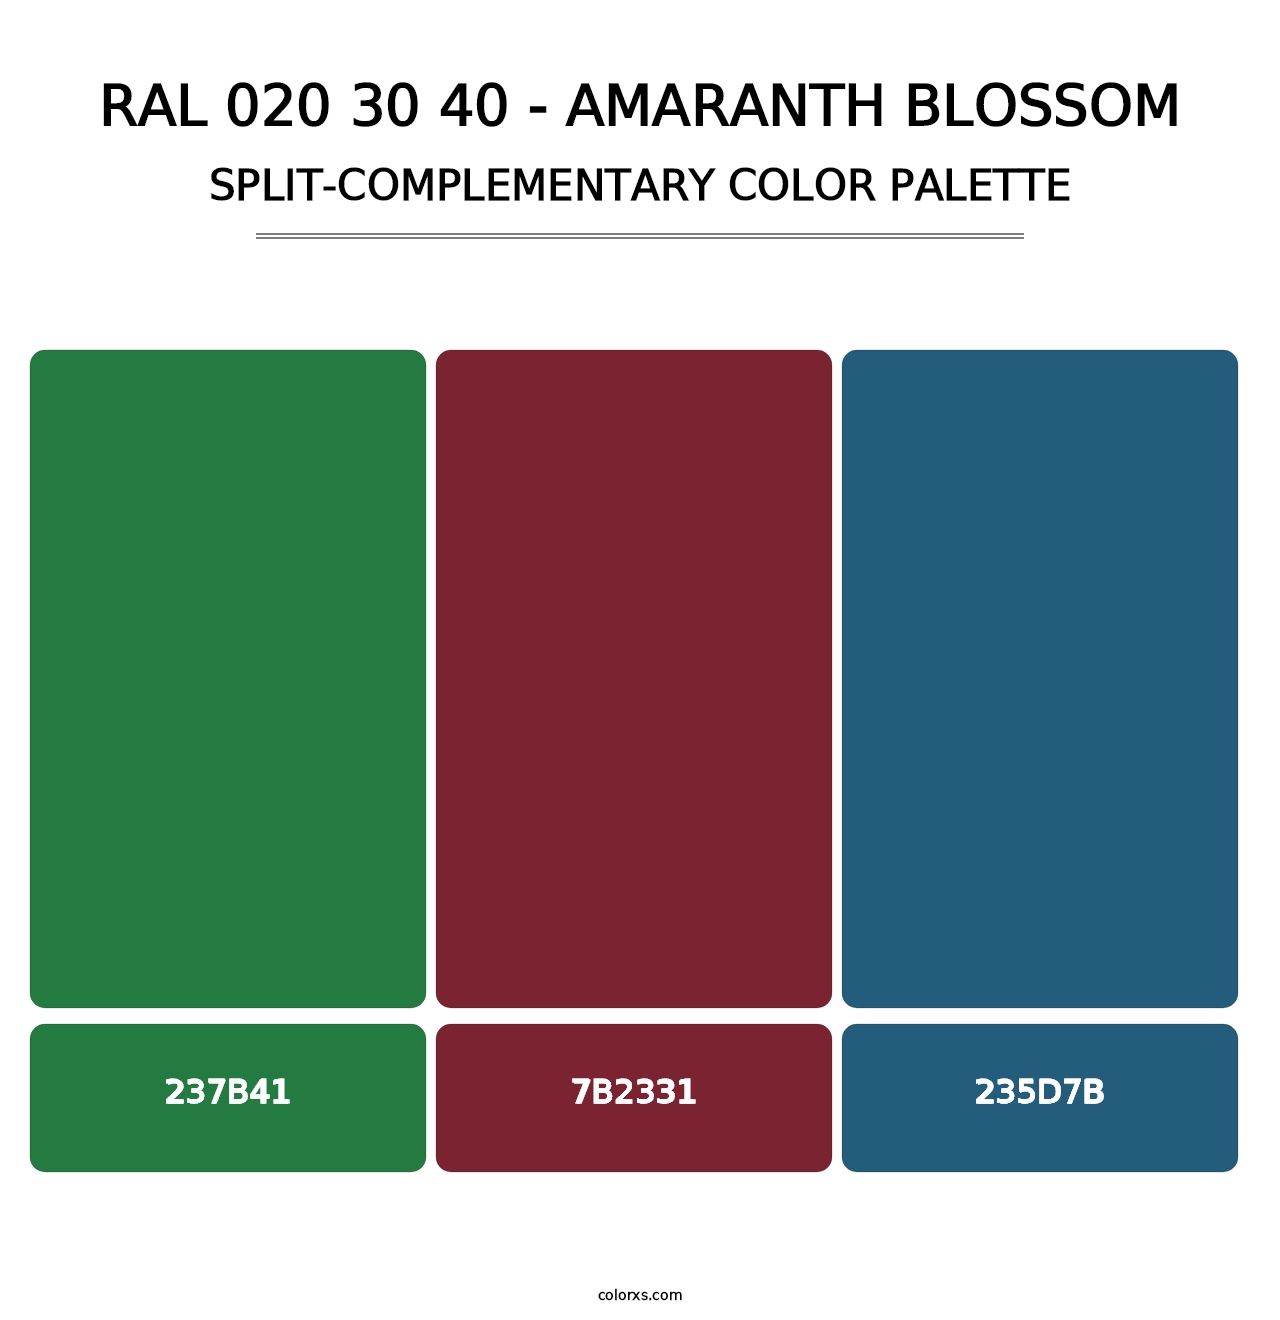 RAL 020 30 40 - Amaranth Blossom - Split-Complementary Color Palette